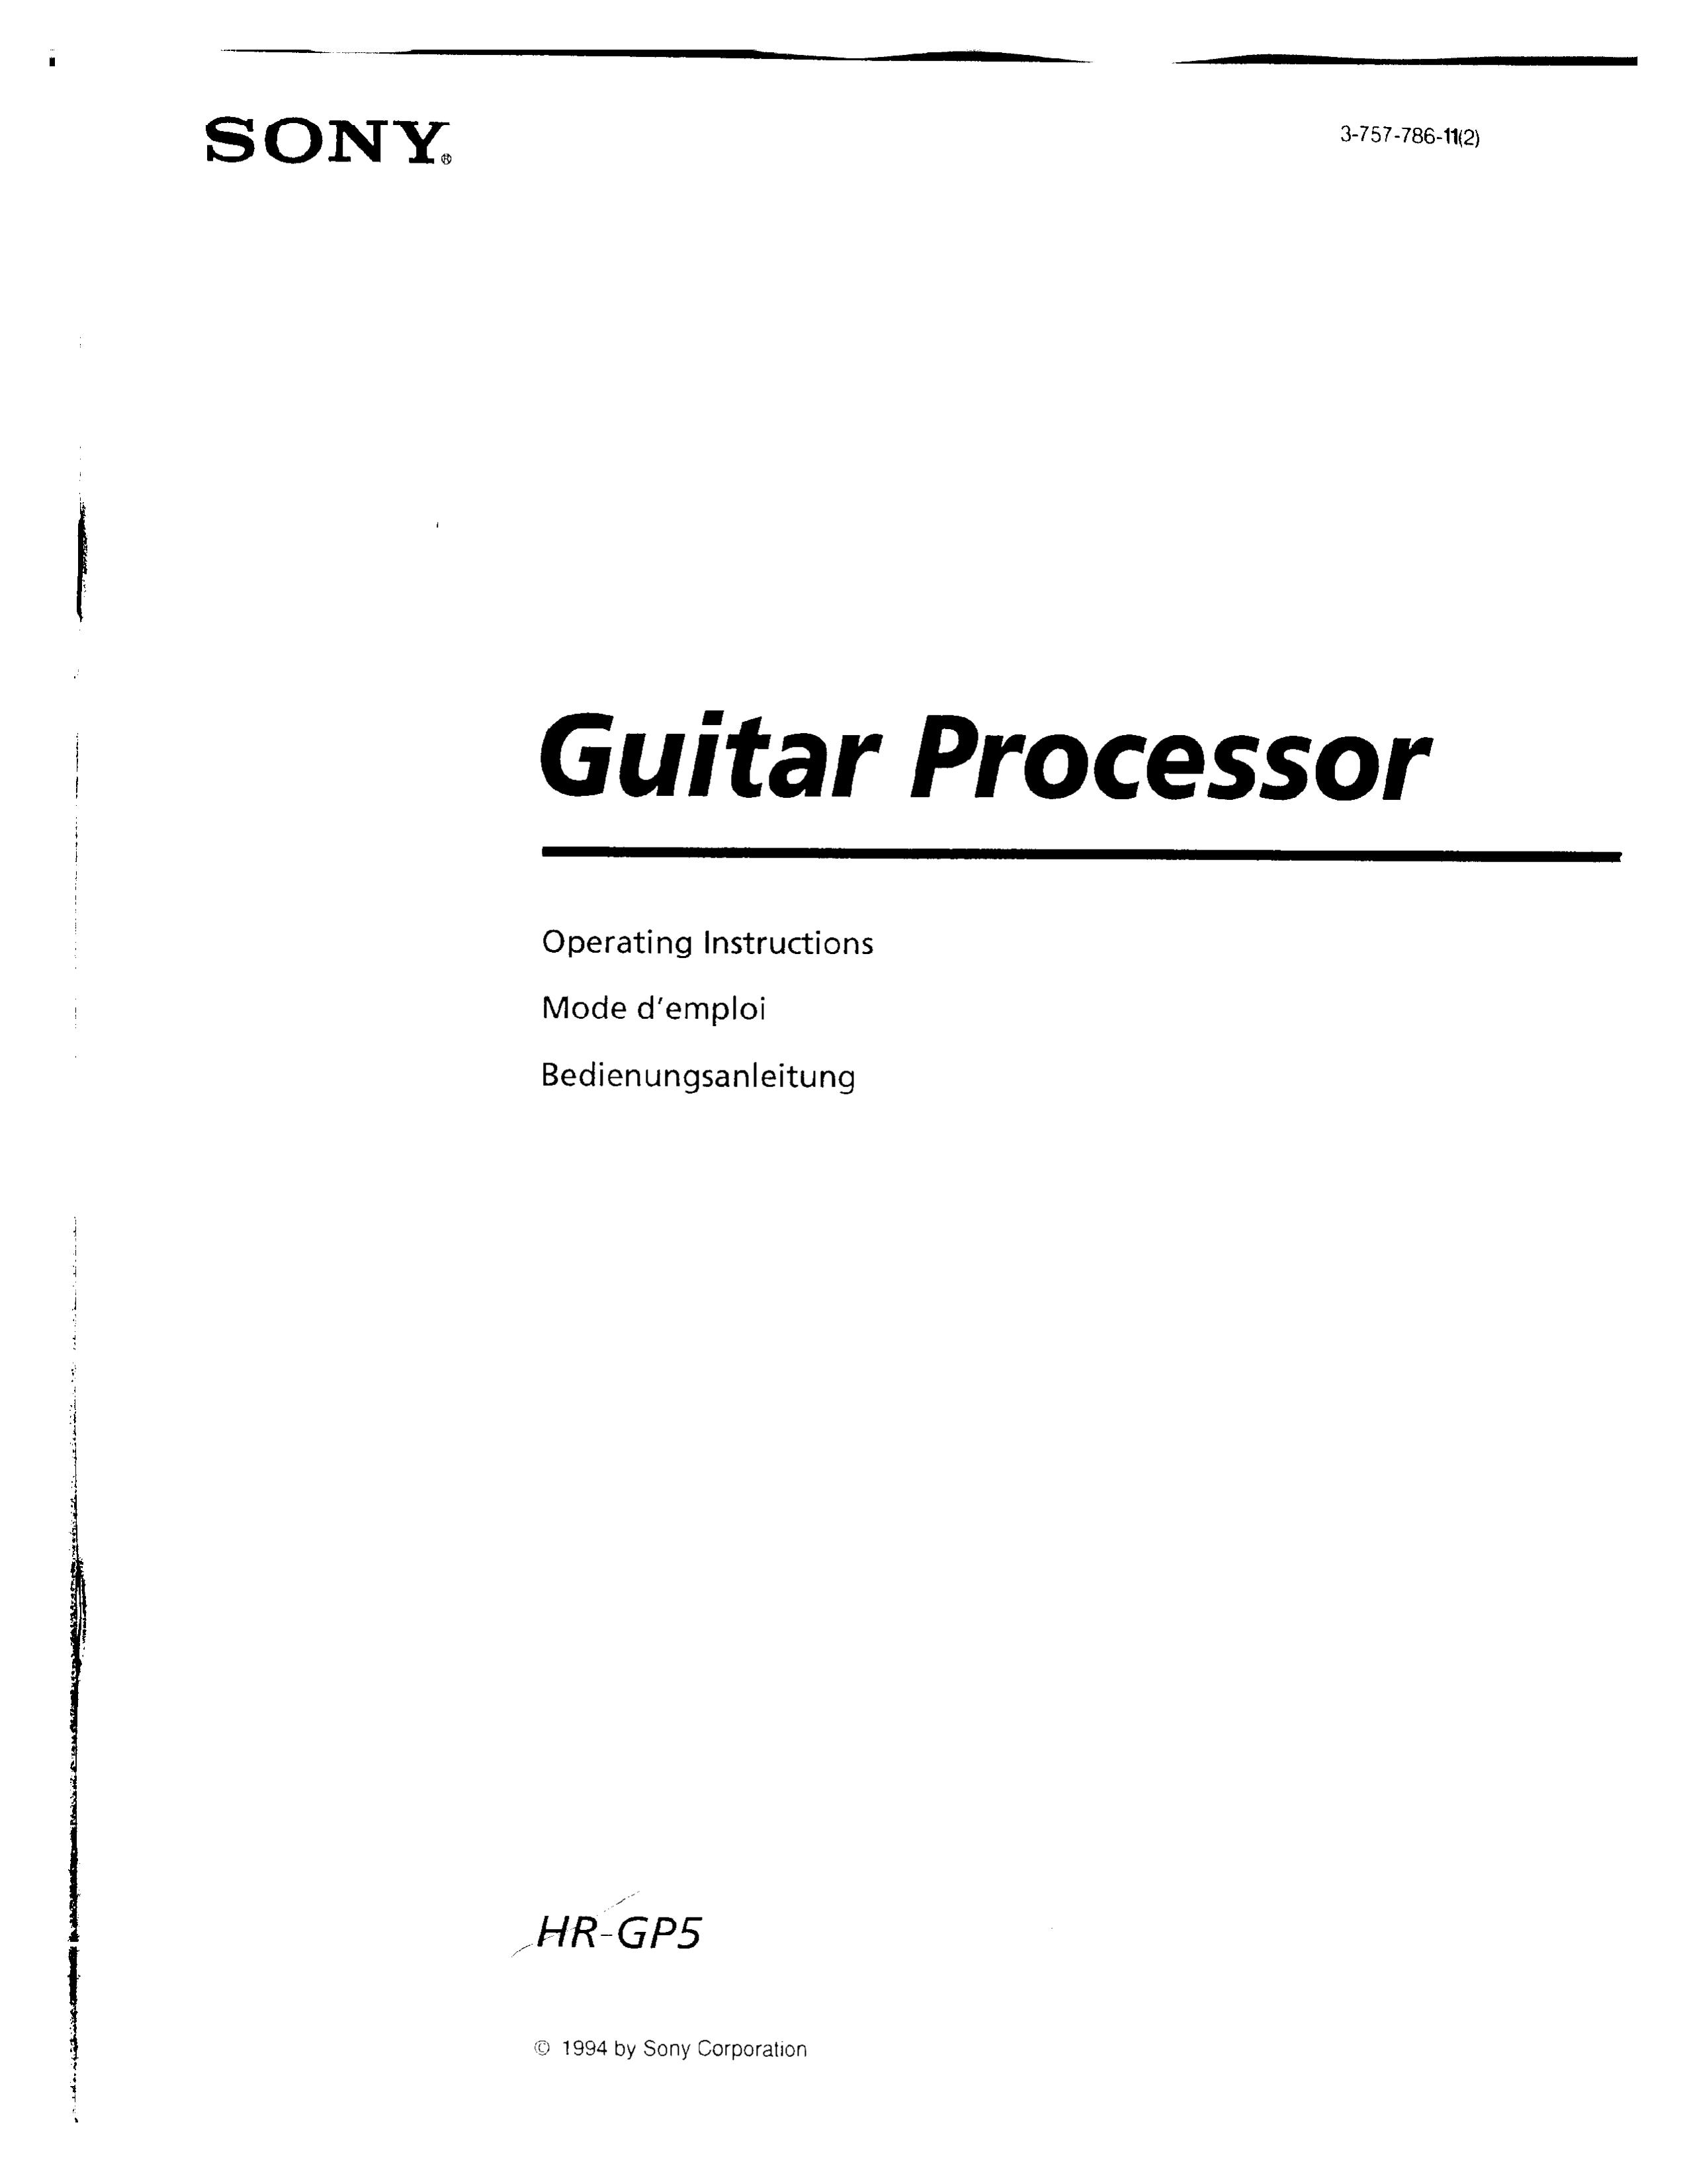 Sony HR GP5 Music Pedal User Manual